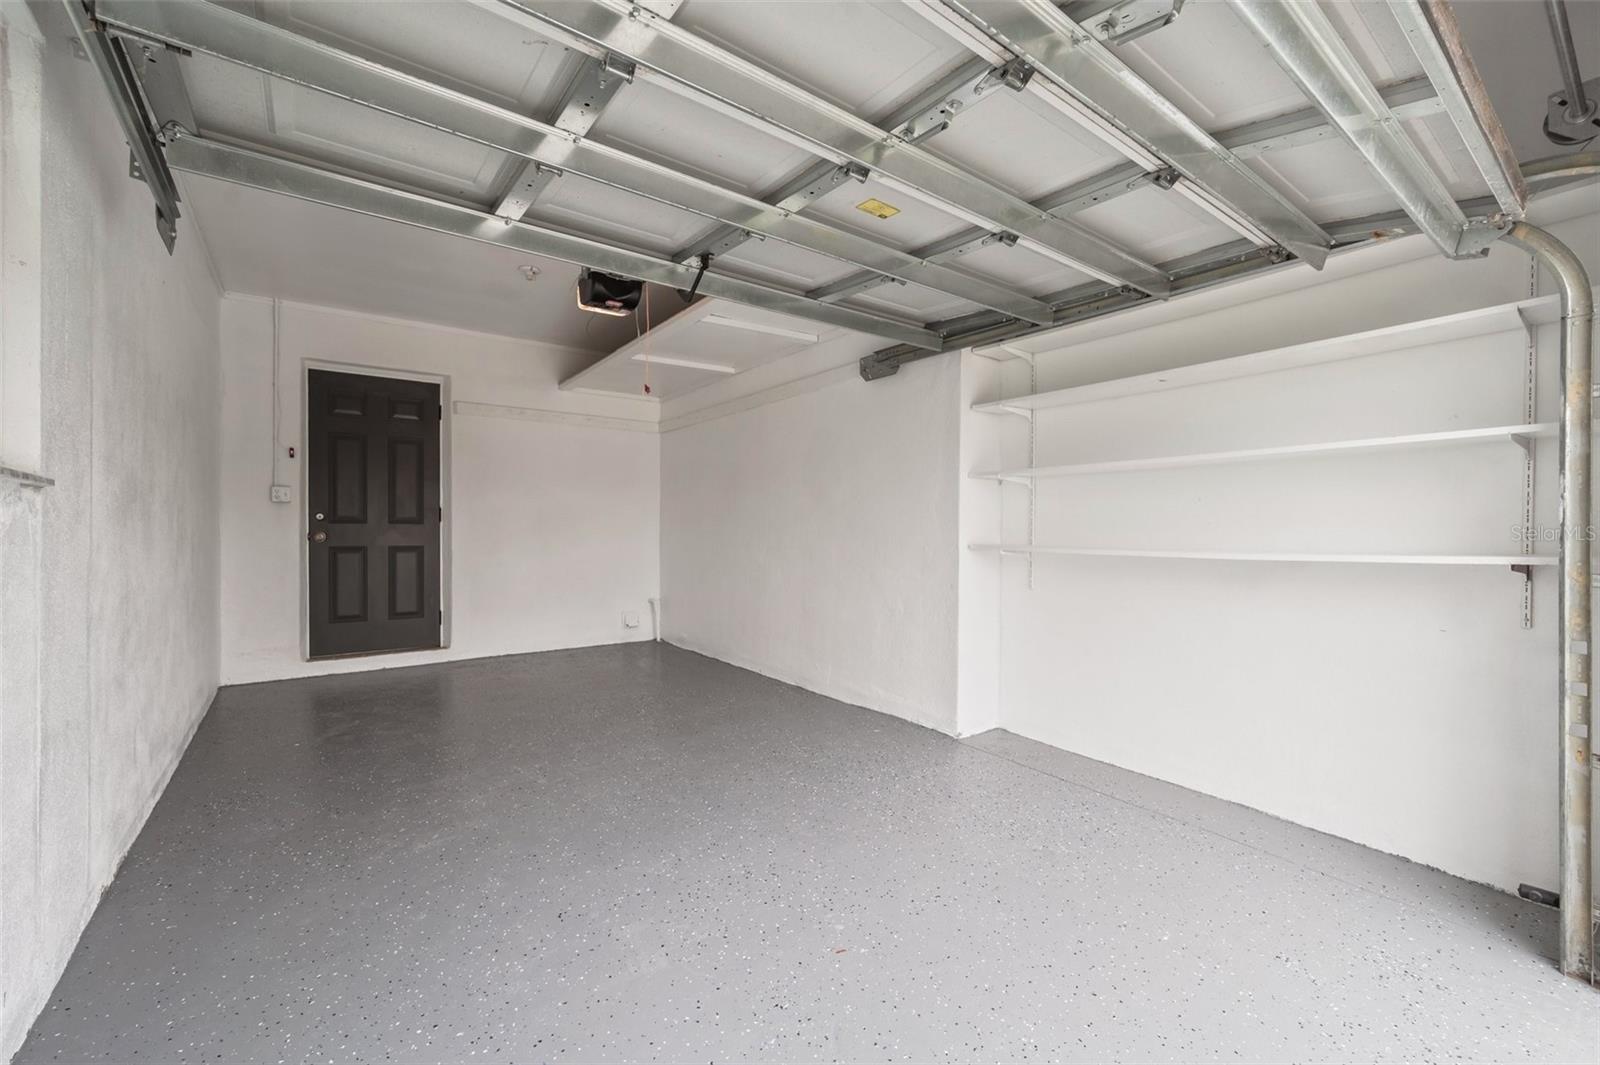 Garage with new epoxy floor